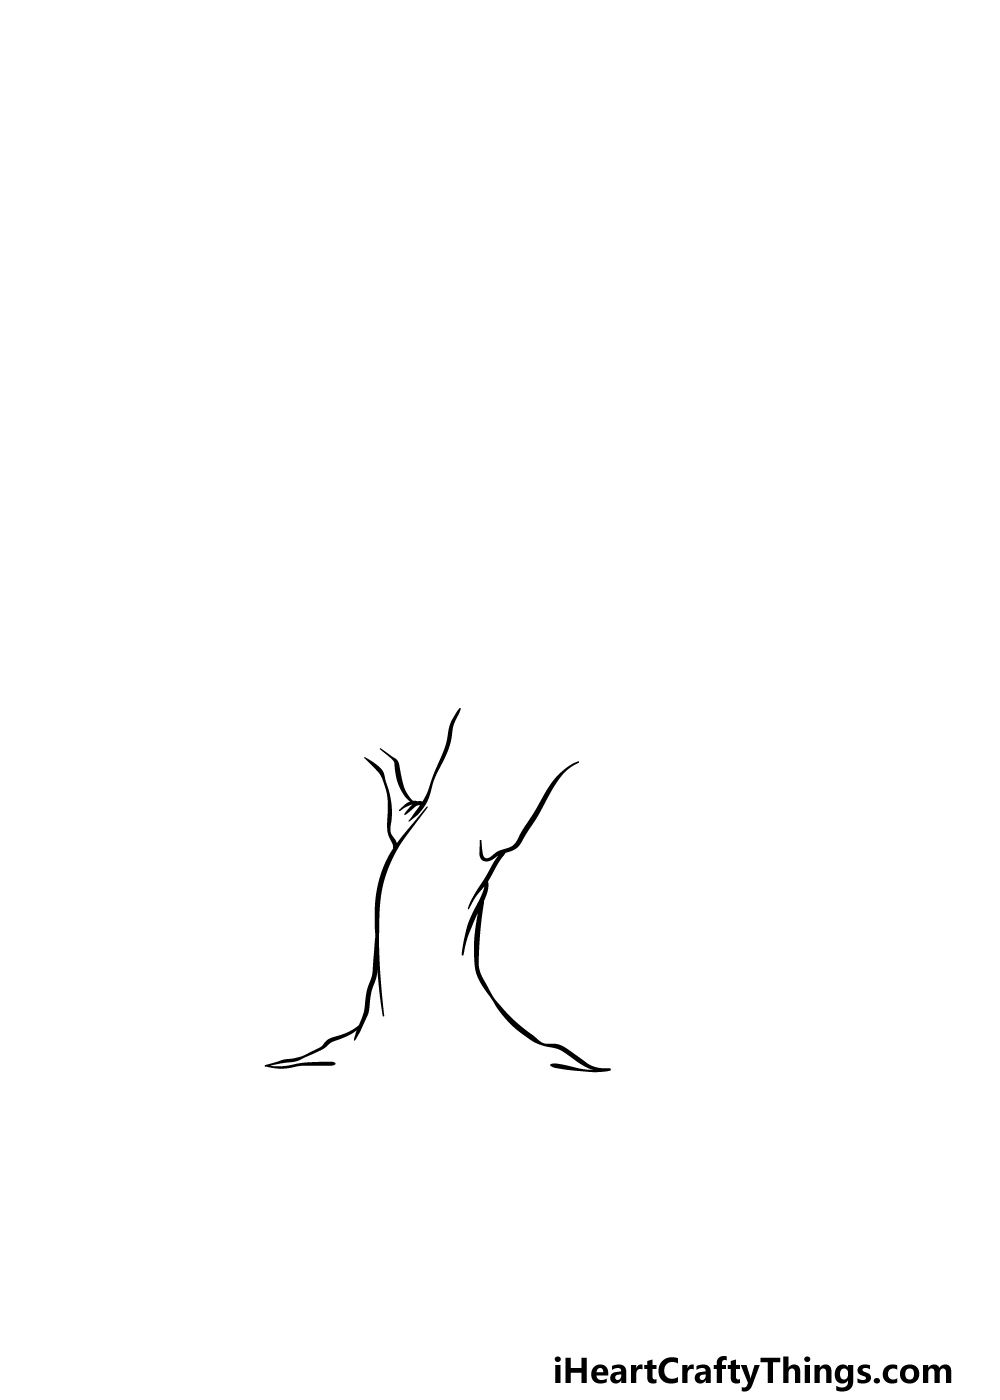 drawing an oak tree step 1